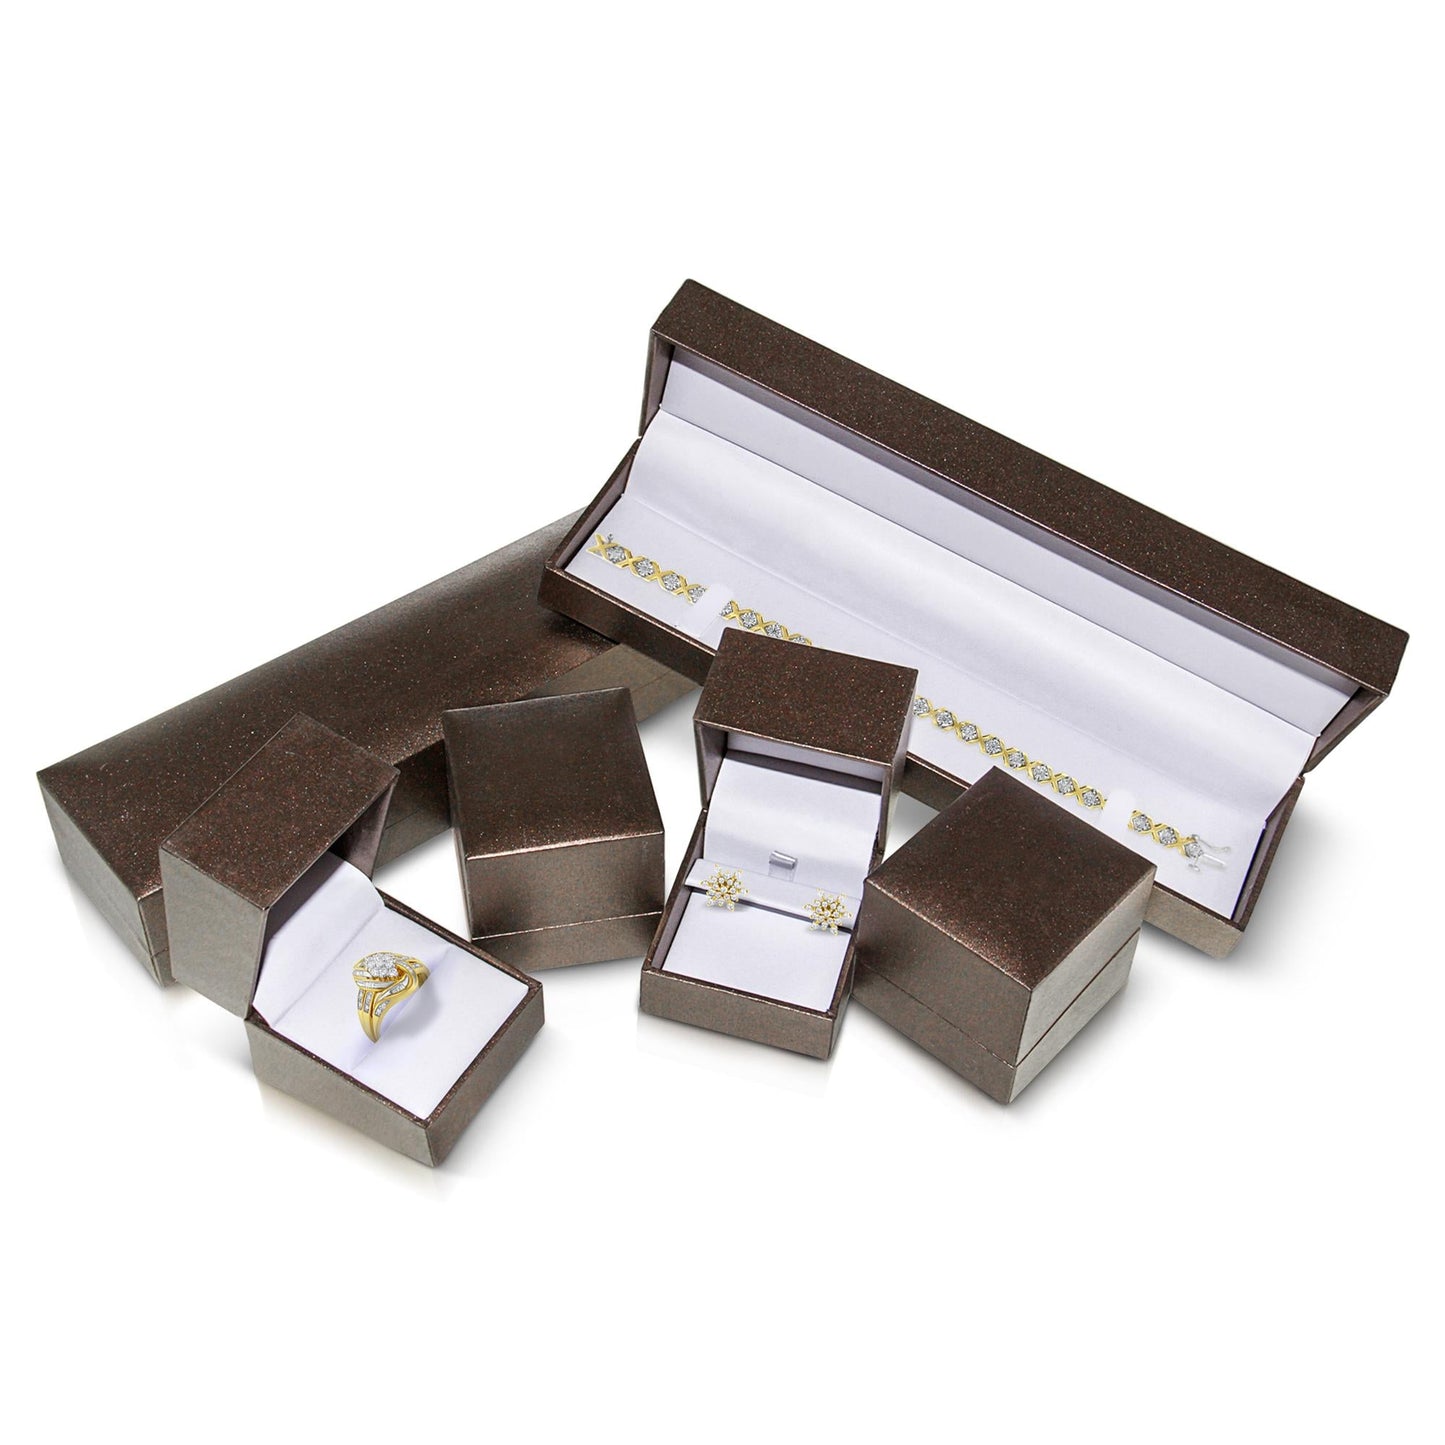 10K White Gold 1/2 Cttw Invisible-Set Princess Cut & Prong-Set Baguette Diamond Composite Stud Earrings (H-I Color, I1-I2 Clarity)